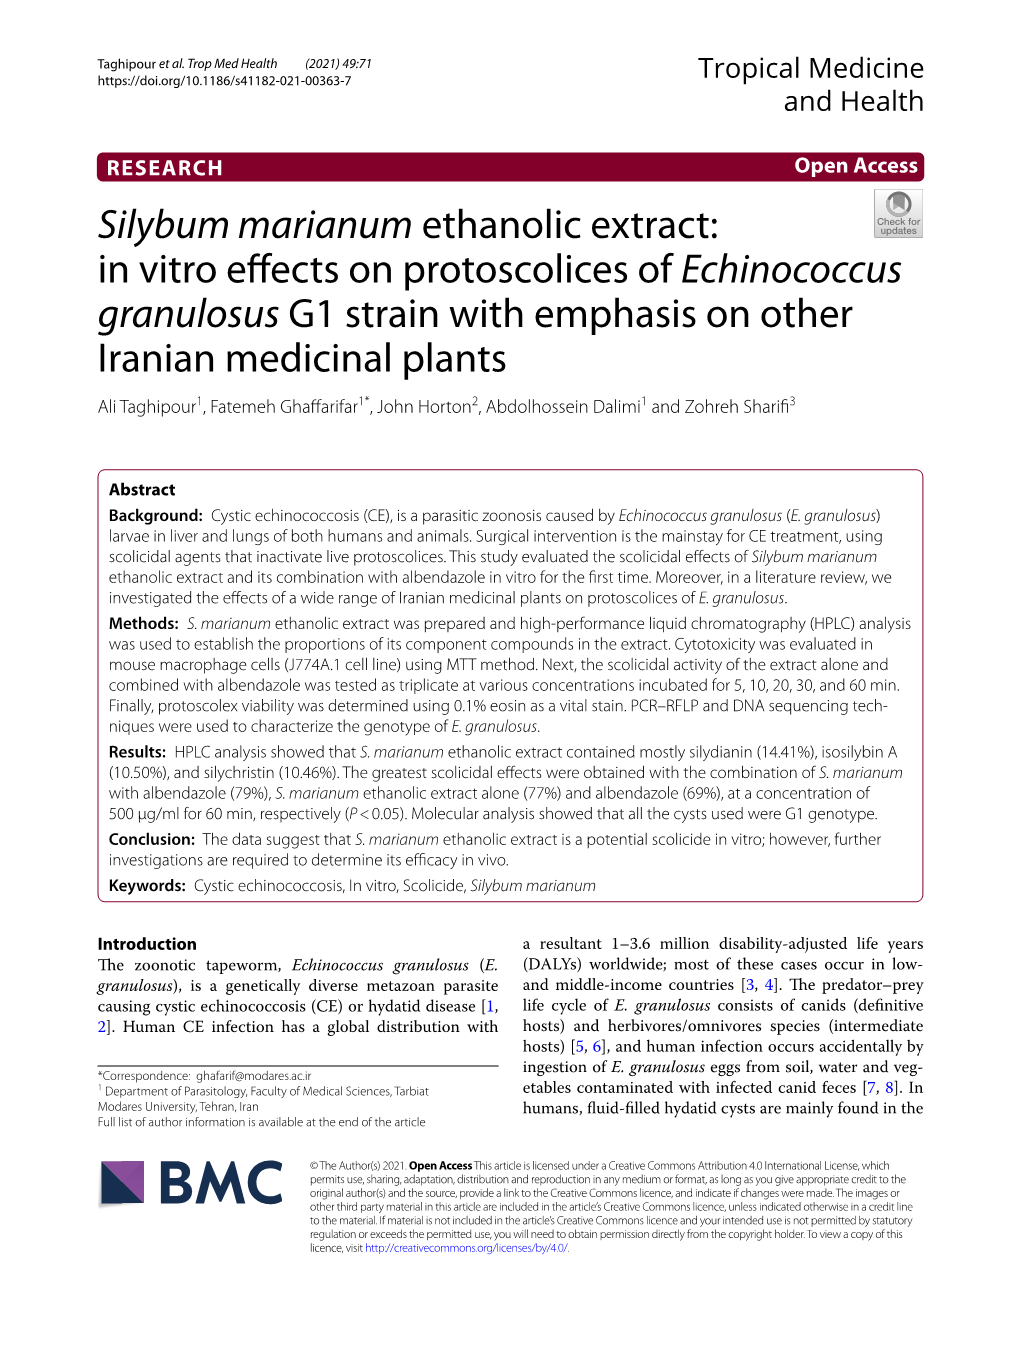 Silybum Marianum Ethanolic Extract: in Vitro Effects on Protoscolices Of